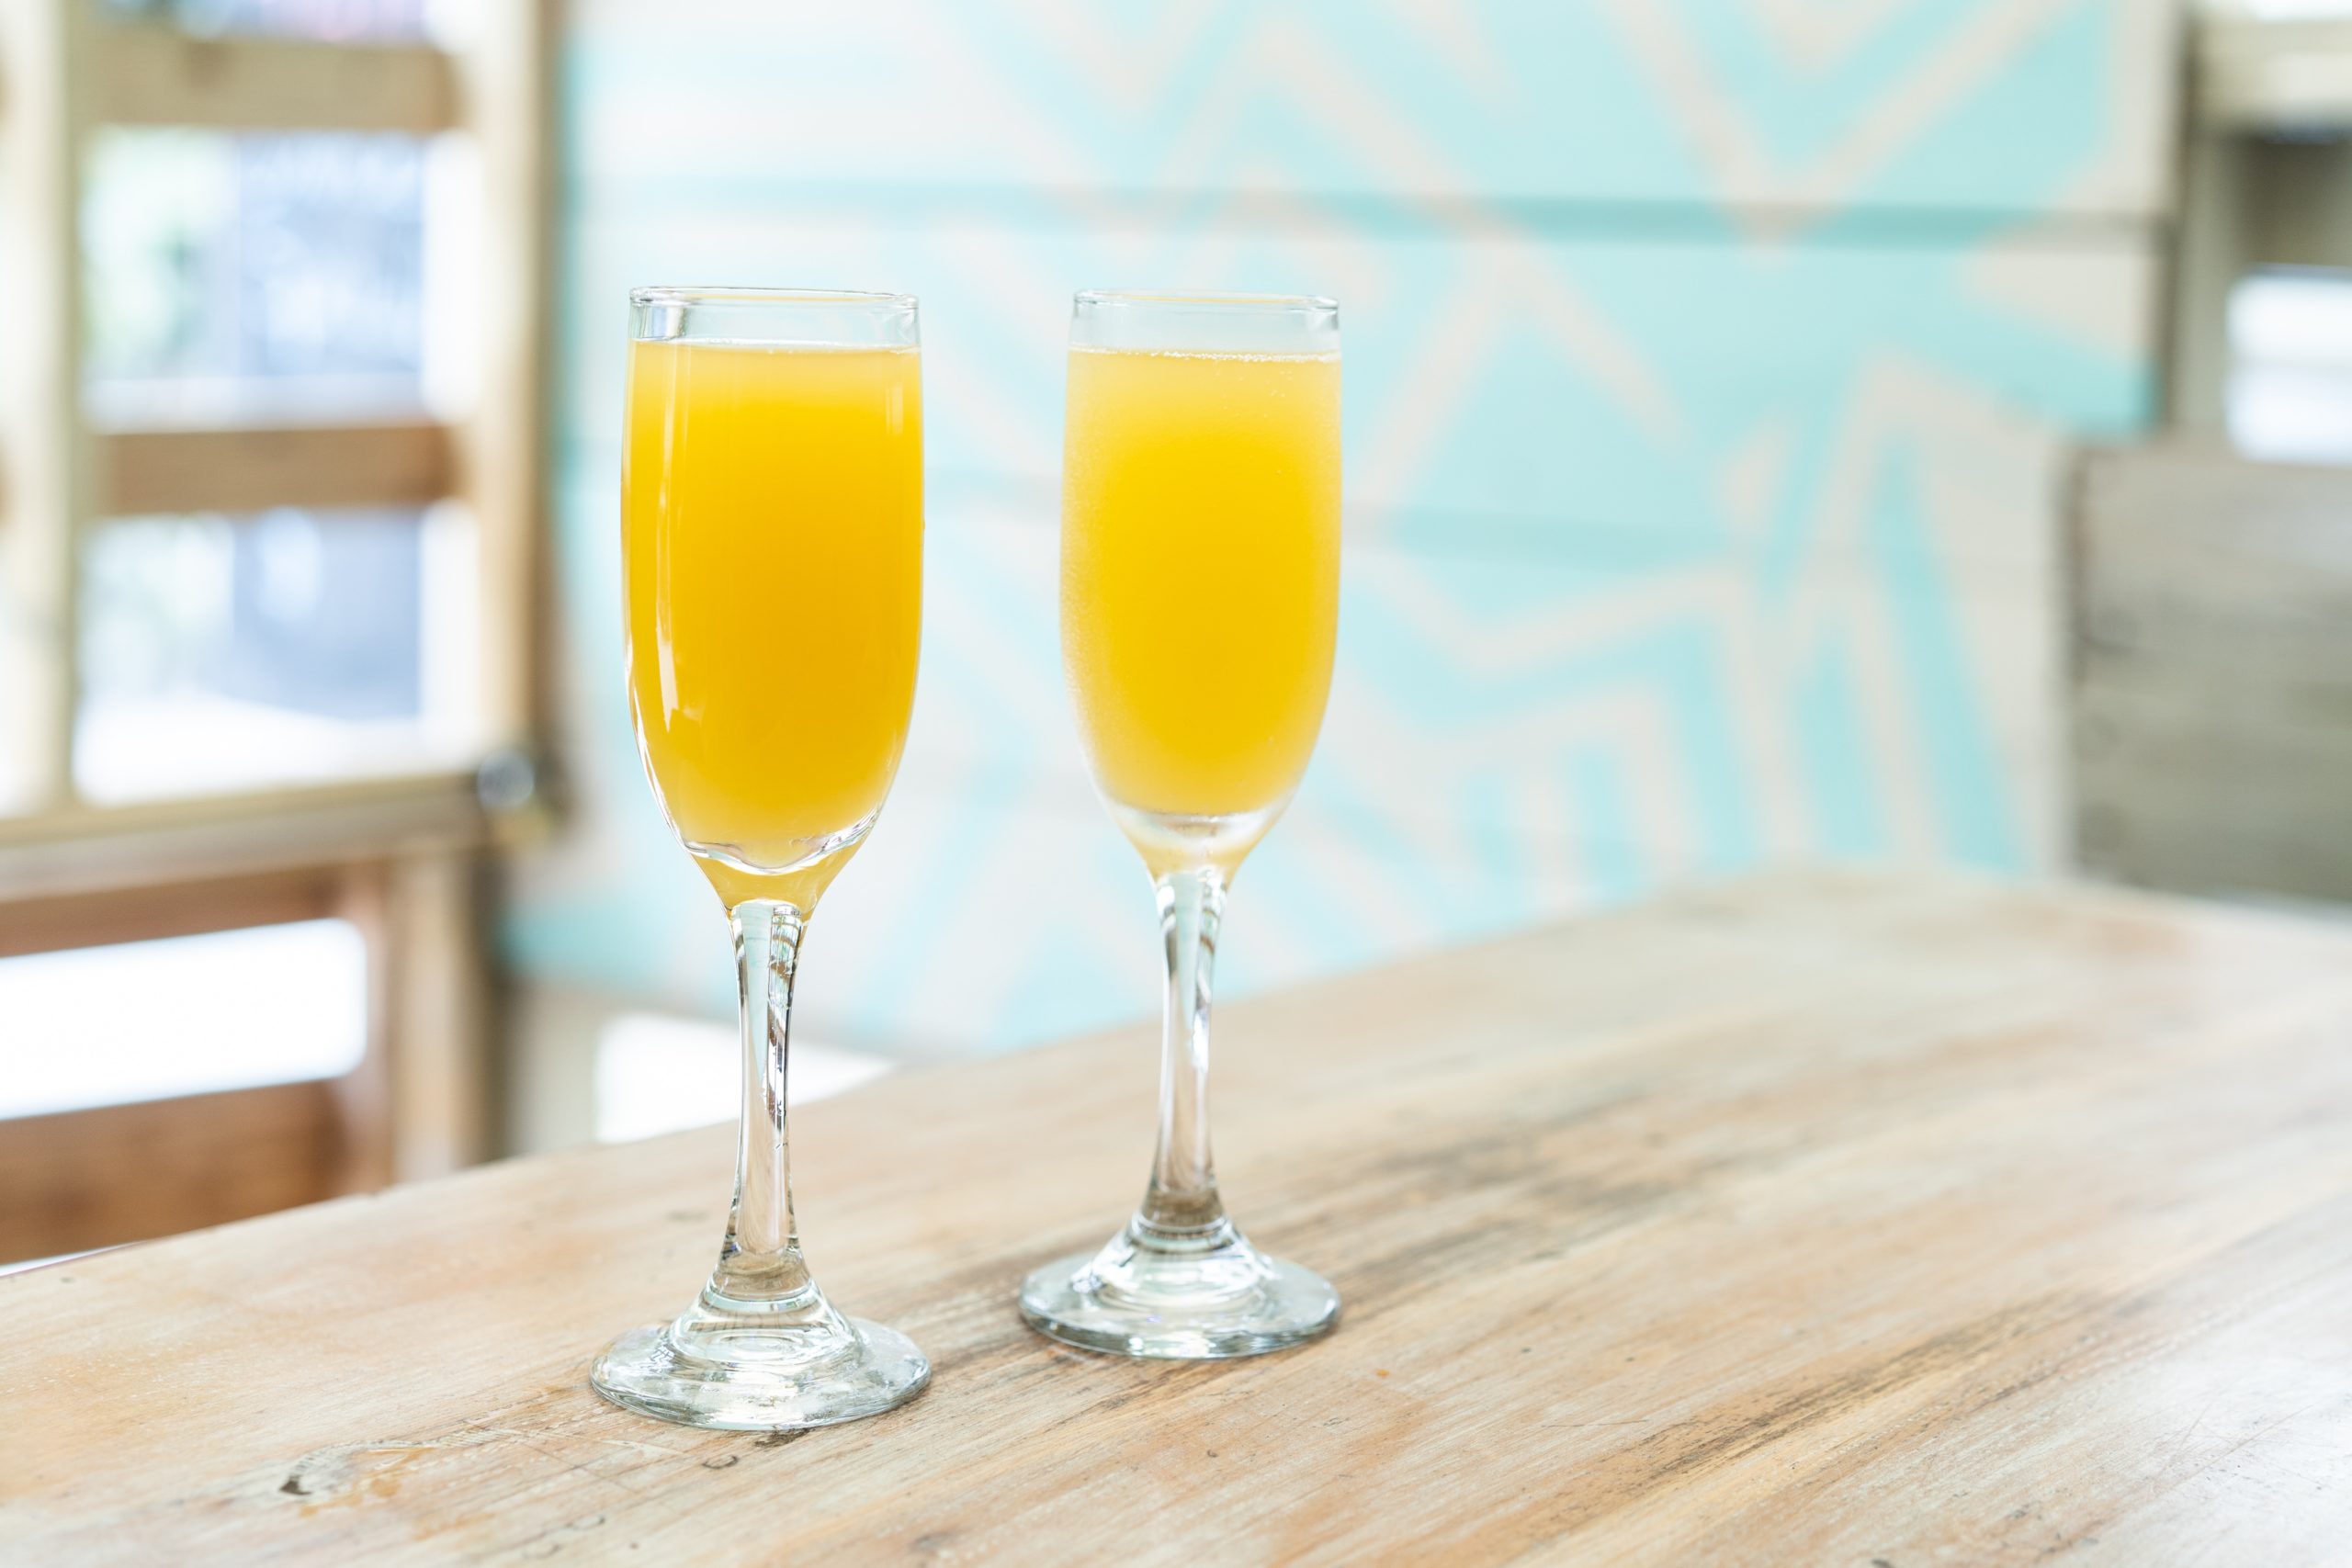 Bubbles Galore: 5 Top Spots for Bottomless Mimosas in Pensacola